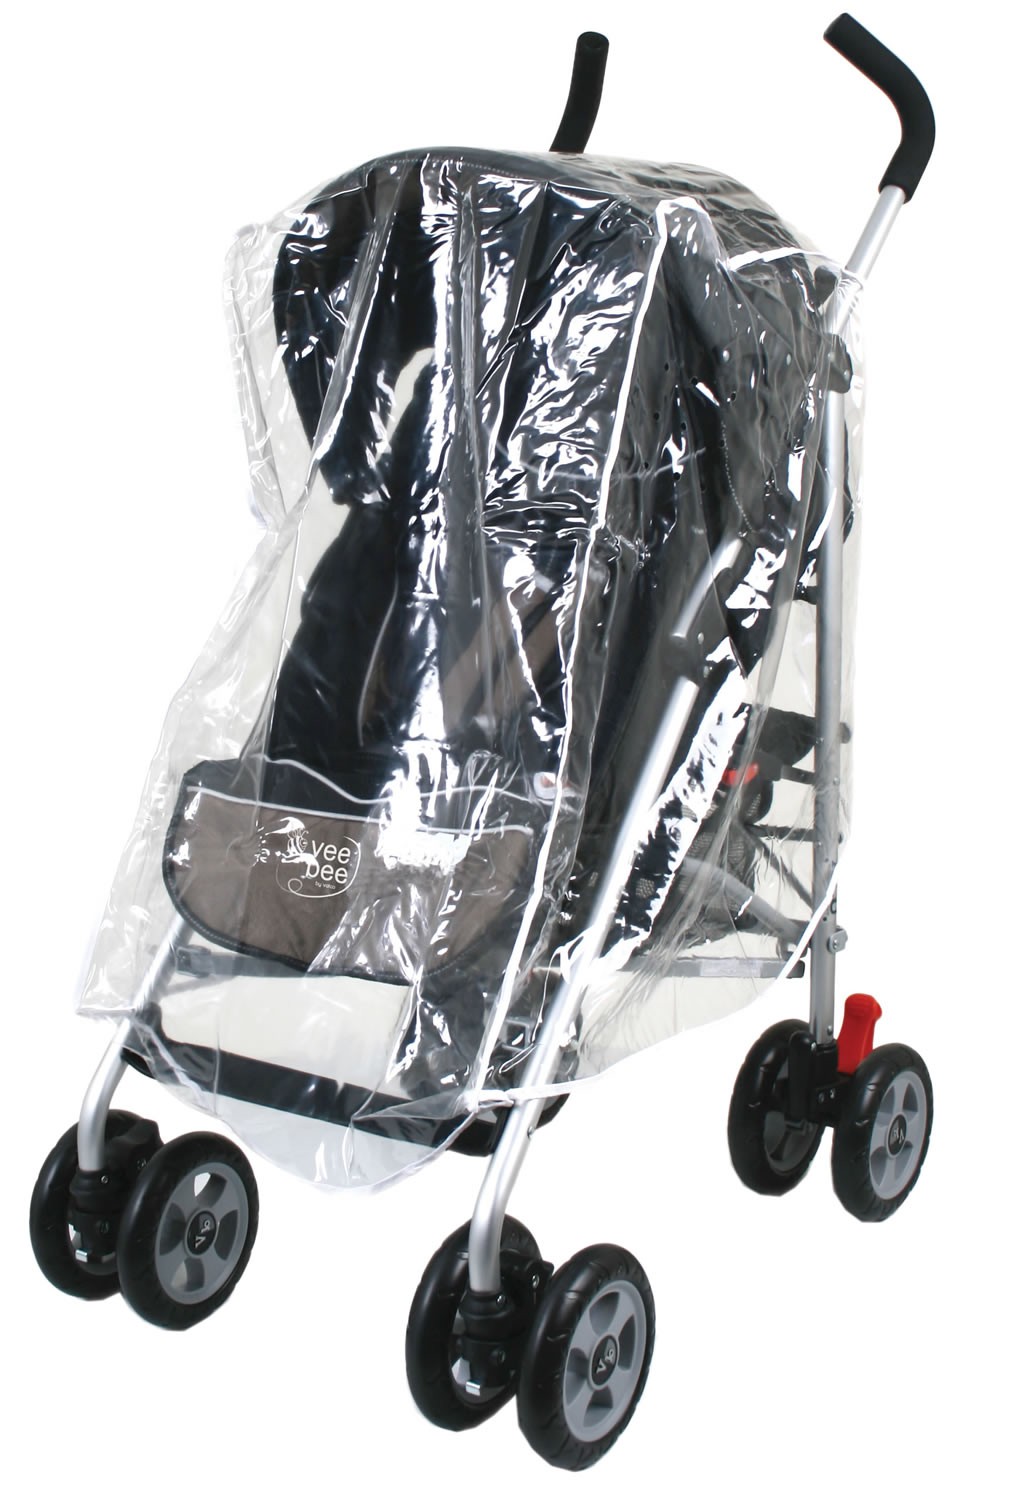 Regard Cart Rain Cover Weatherproof Super Thick Windshield Stroller Raincoat 